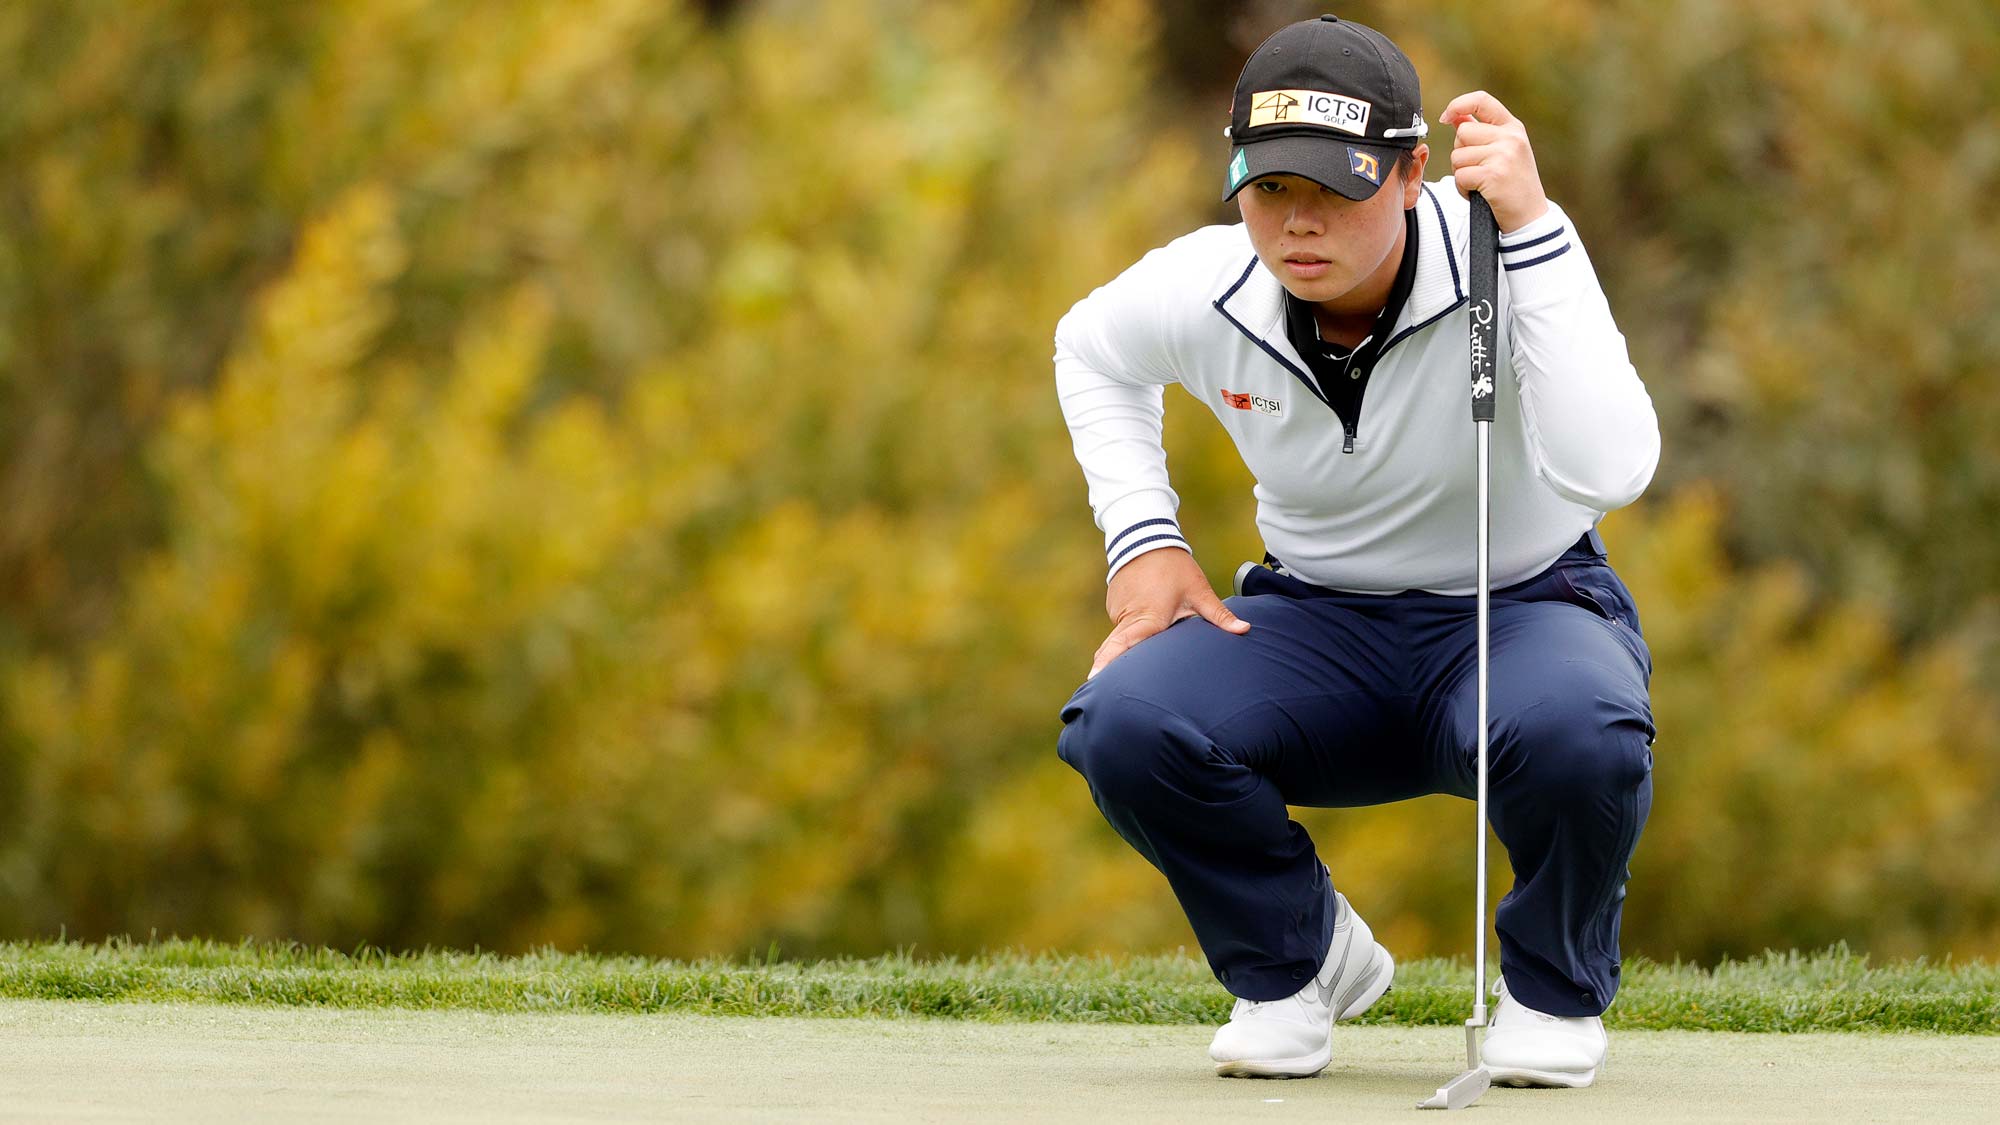 Golfer xếp thứ 2 U.S. Women's Open - Yuka Saso “nghiện” swing của Rory McIlroy